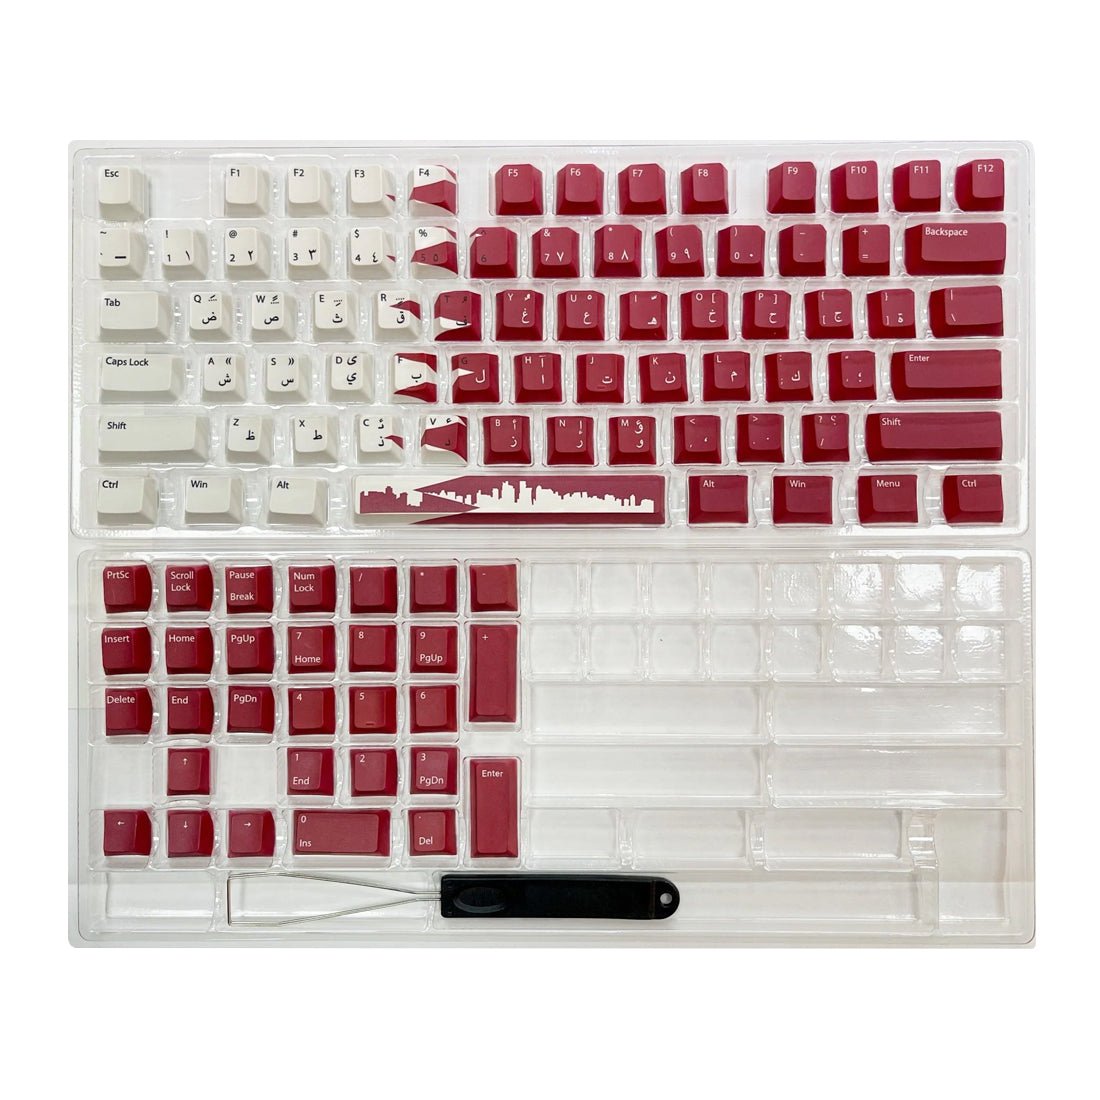 Glitchh PBT Double Shot 108 Keycaps for Mechanical Keyboard - Cherry MX/Qatar Flag - أكسسوار لوحة مفاتيح - Store 974 | ستور ٩٧٤